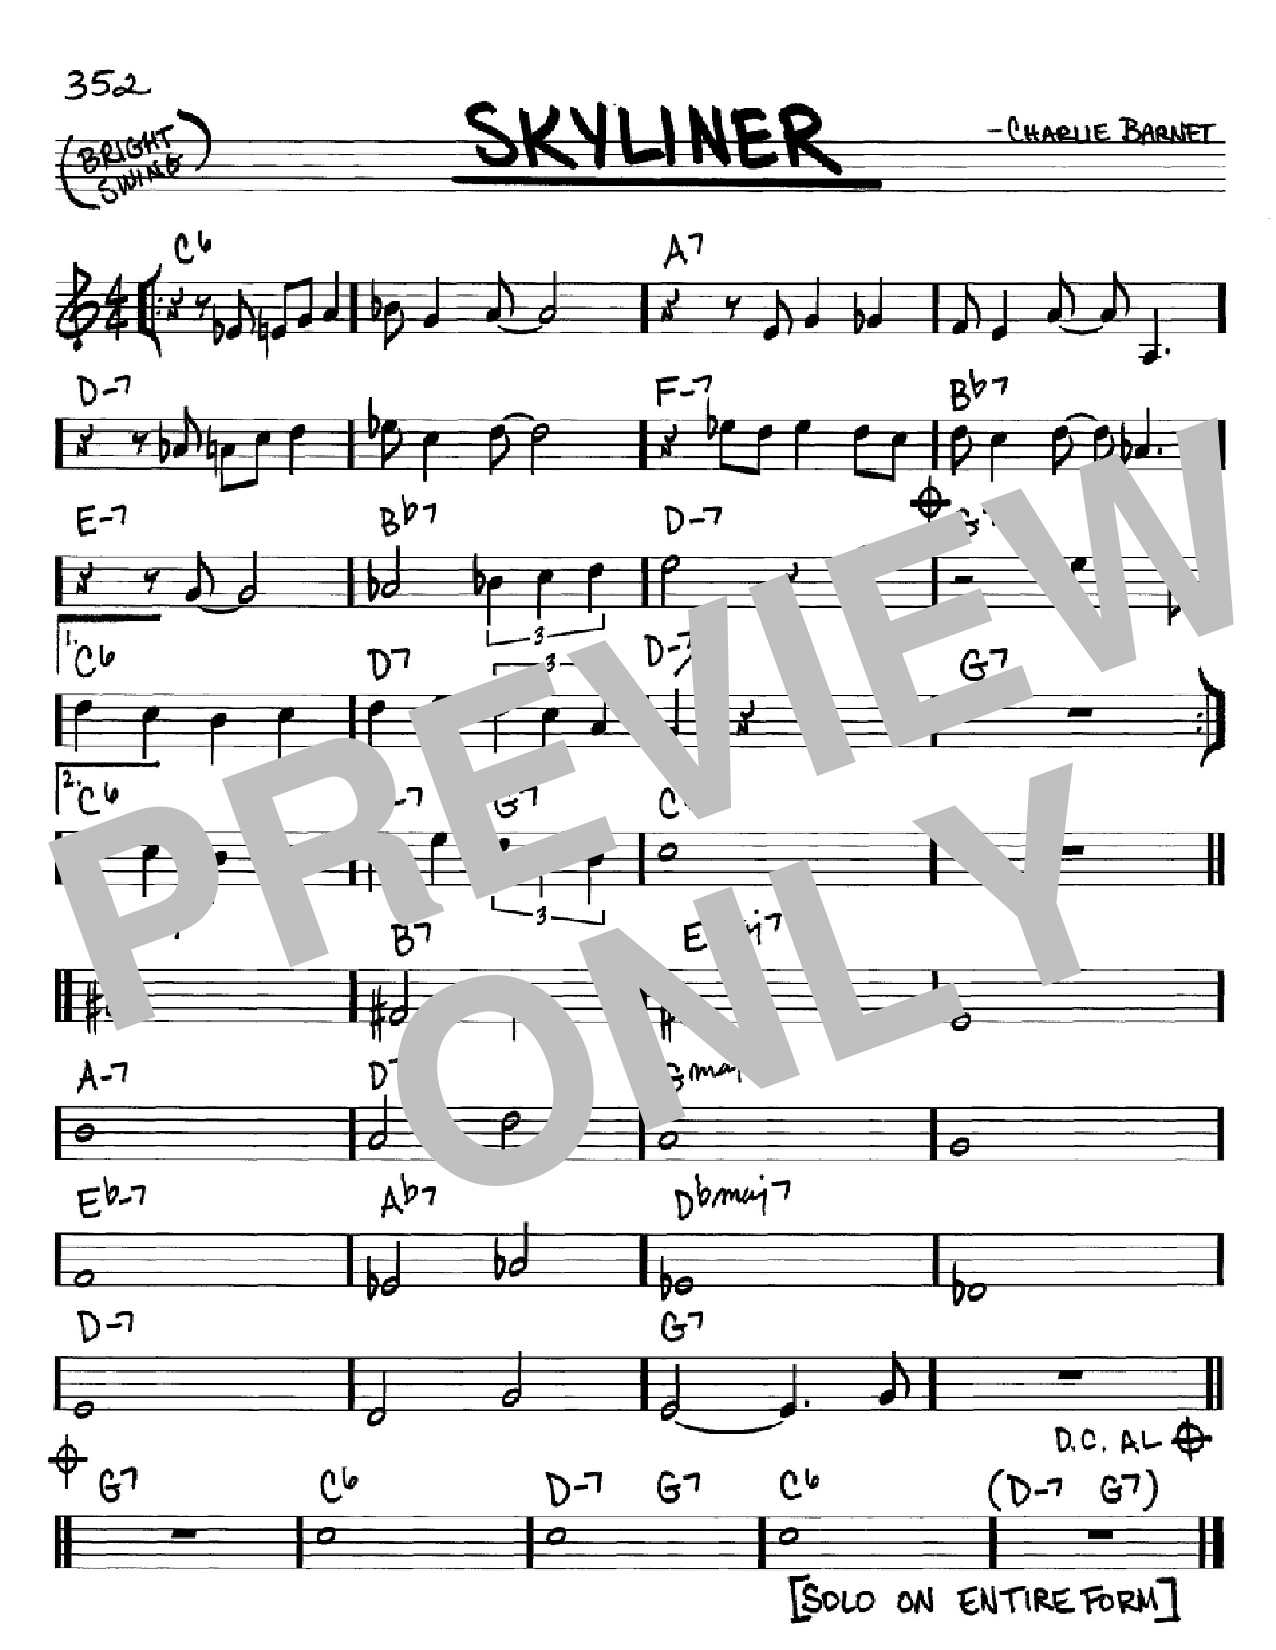 Charlie Barnet Skyliner Sheet Music Notes & Chords for Real Book - Melody, Lyrics & Chords - C Instruments - Download or Print PDF